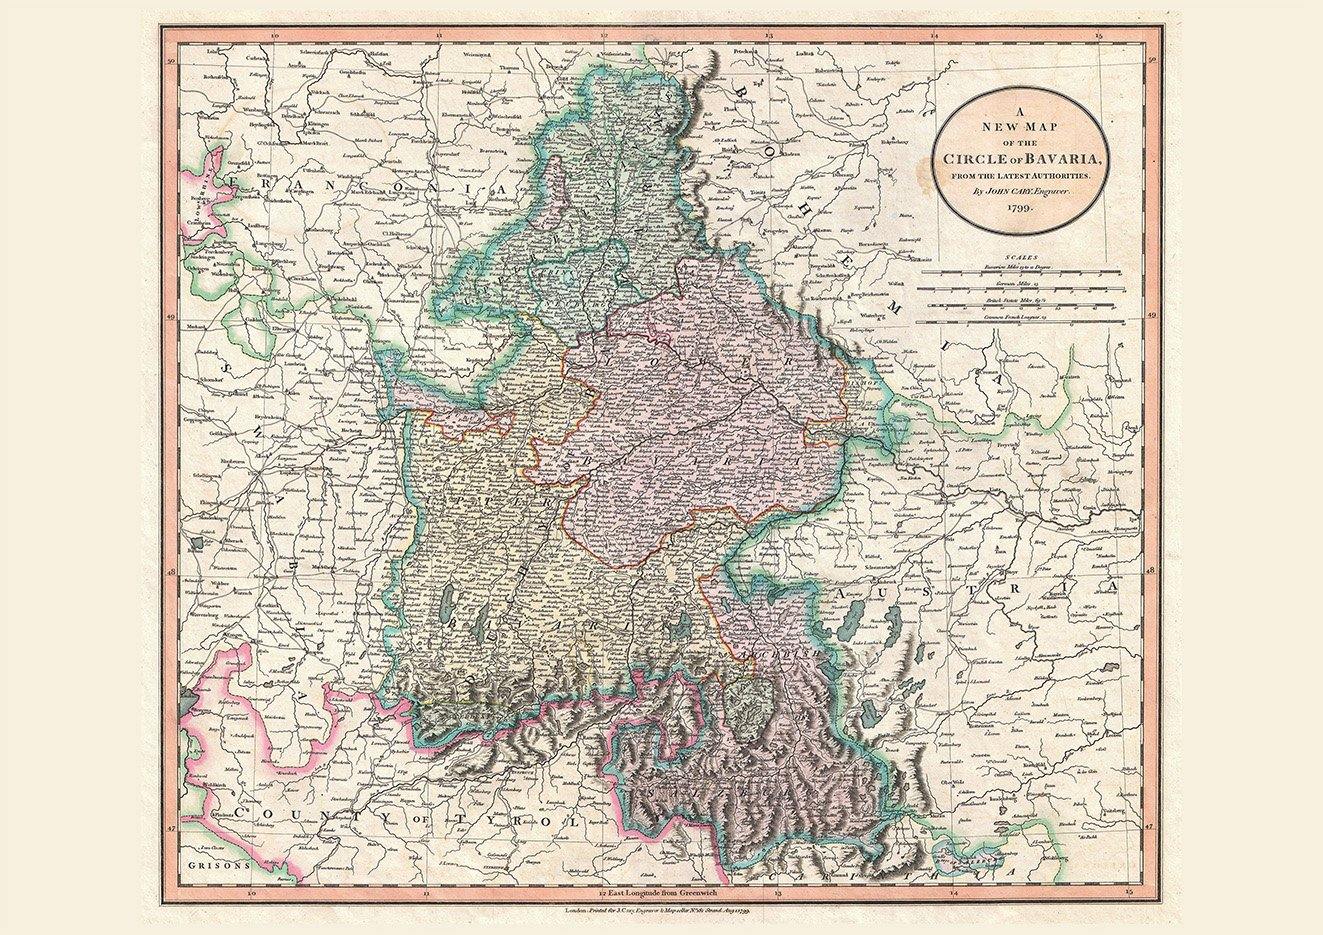 BAVARIAN MAP: Vintage German Reproduction Art Print - Pimlico Prints